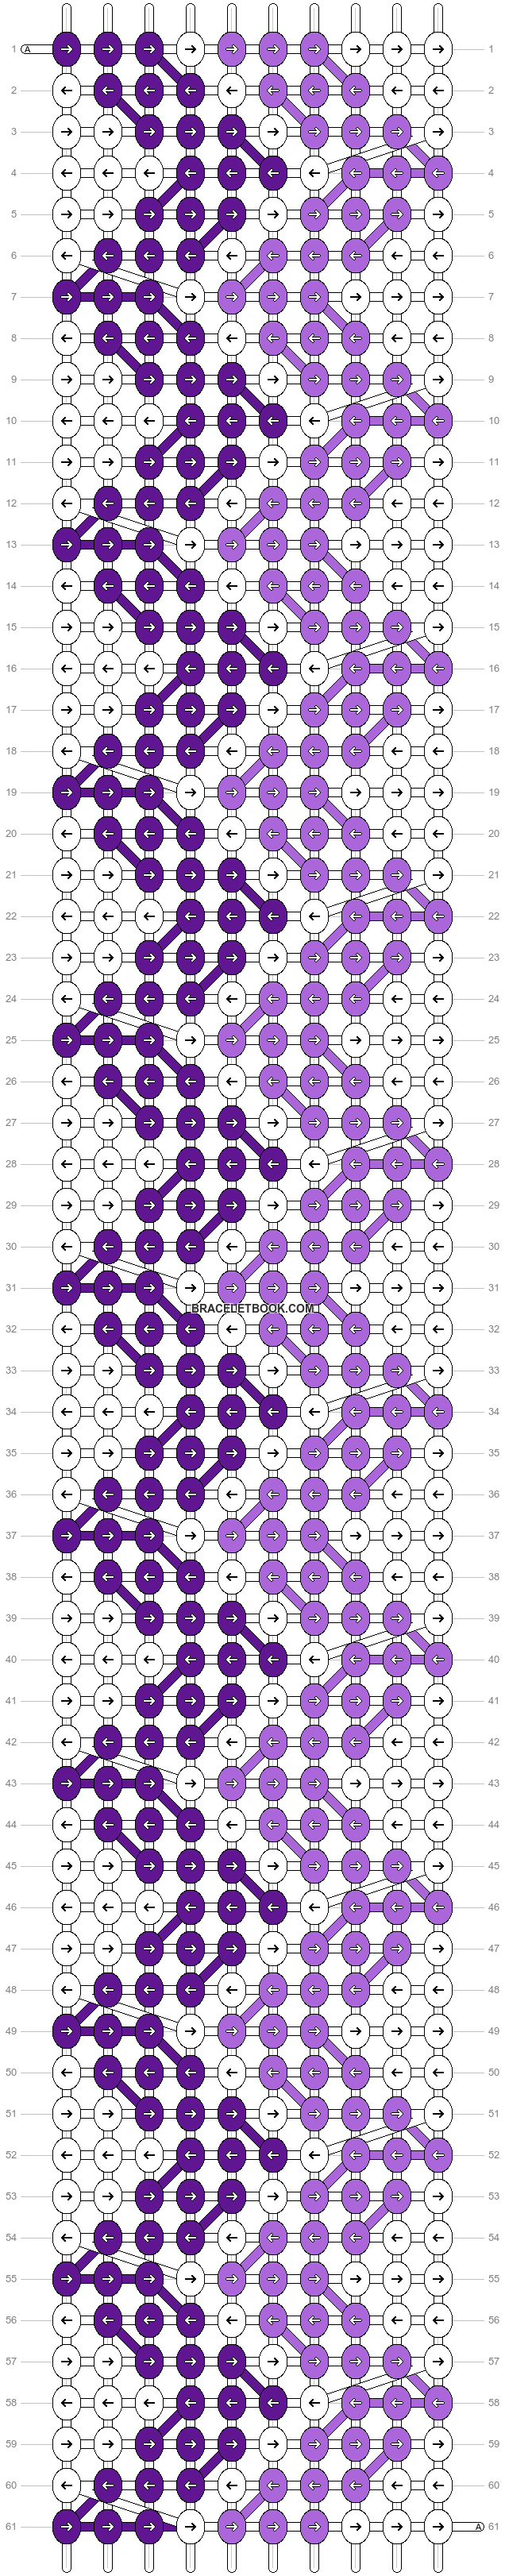 Alpha pattern #25234 pattern